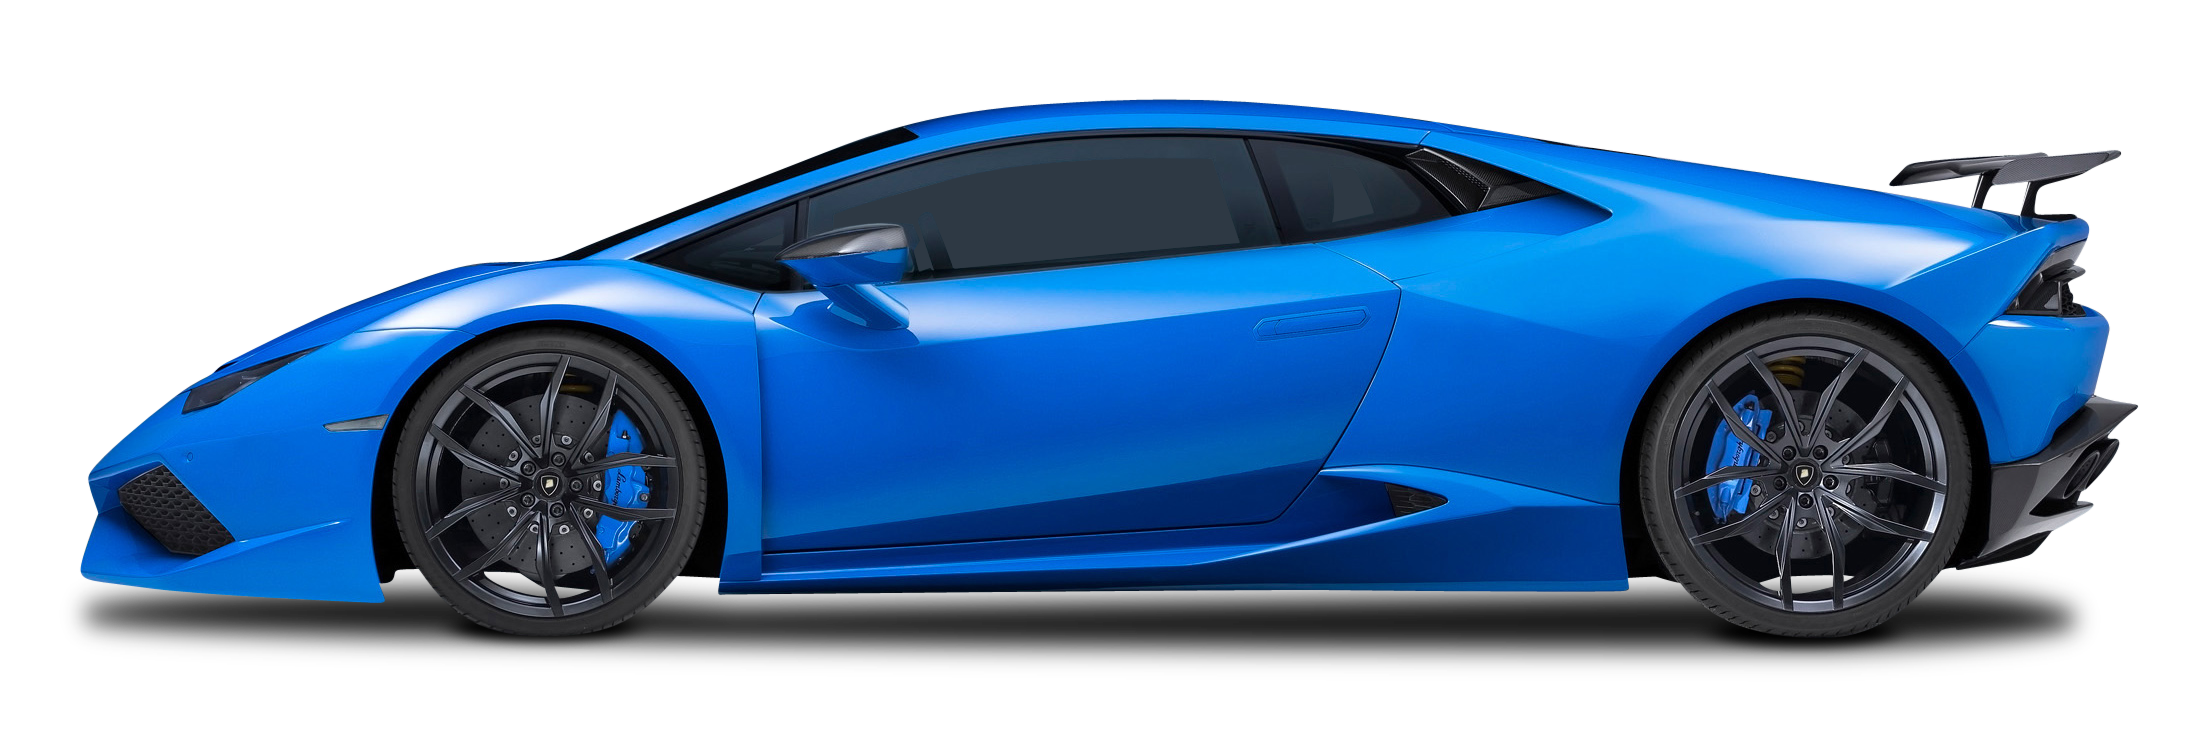 Blue Lamborghini Huracan Car PNG Image